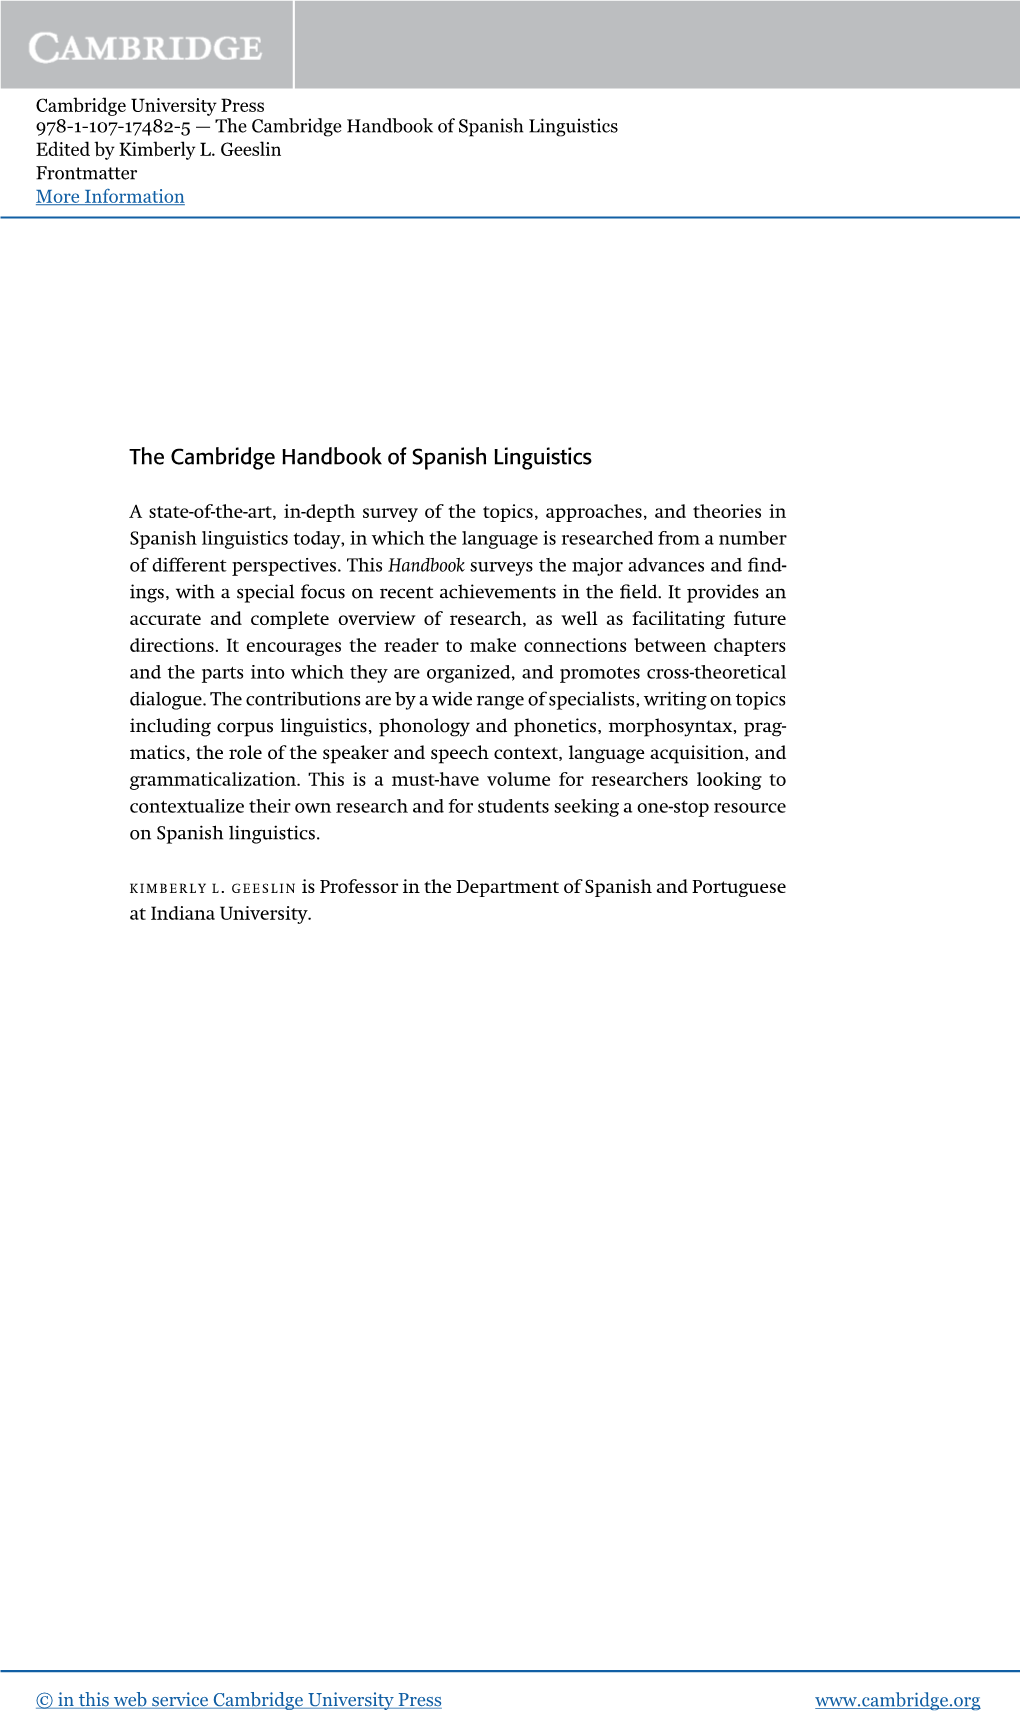 The Cambridge Handbook of Spanish Linguistics Edited by Kimberly L